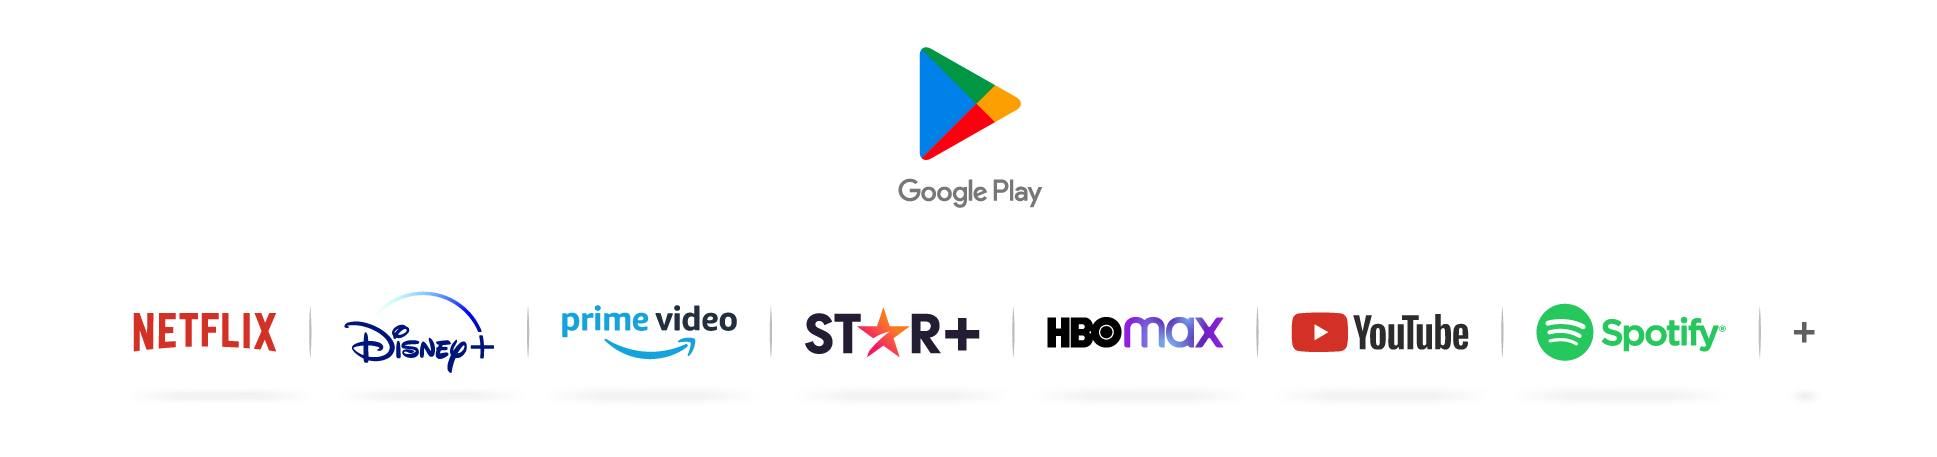 Google Play con miles de apps